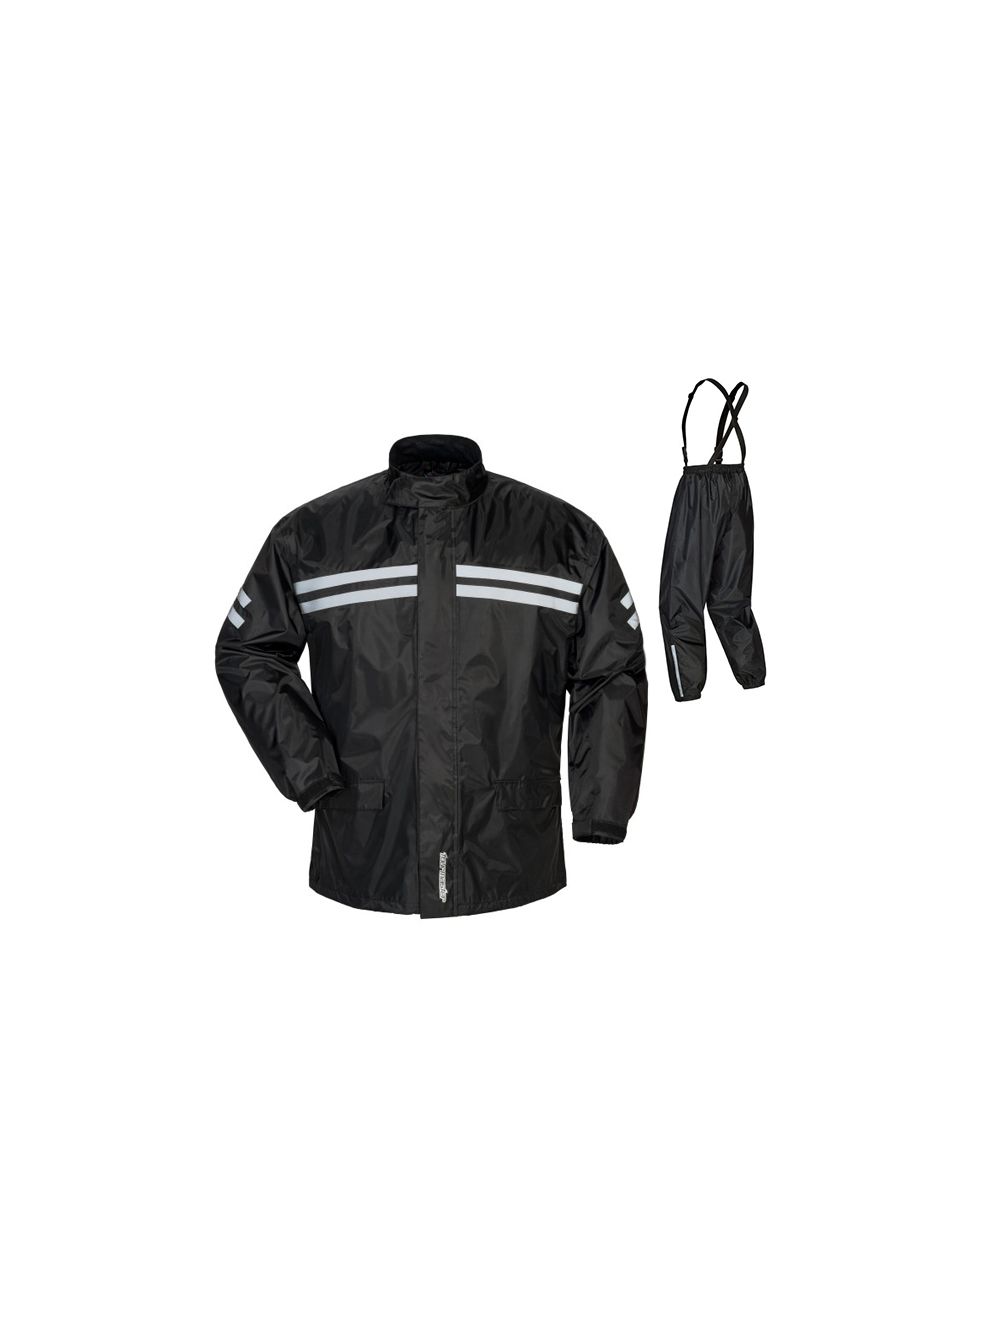 Motorcycle Raincoat Suit Rainstorm Prevention Jacket Pants Camping